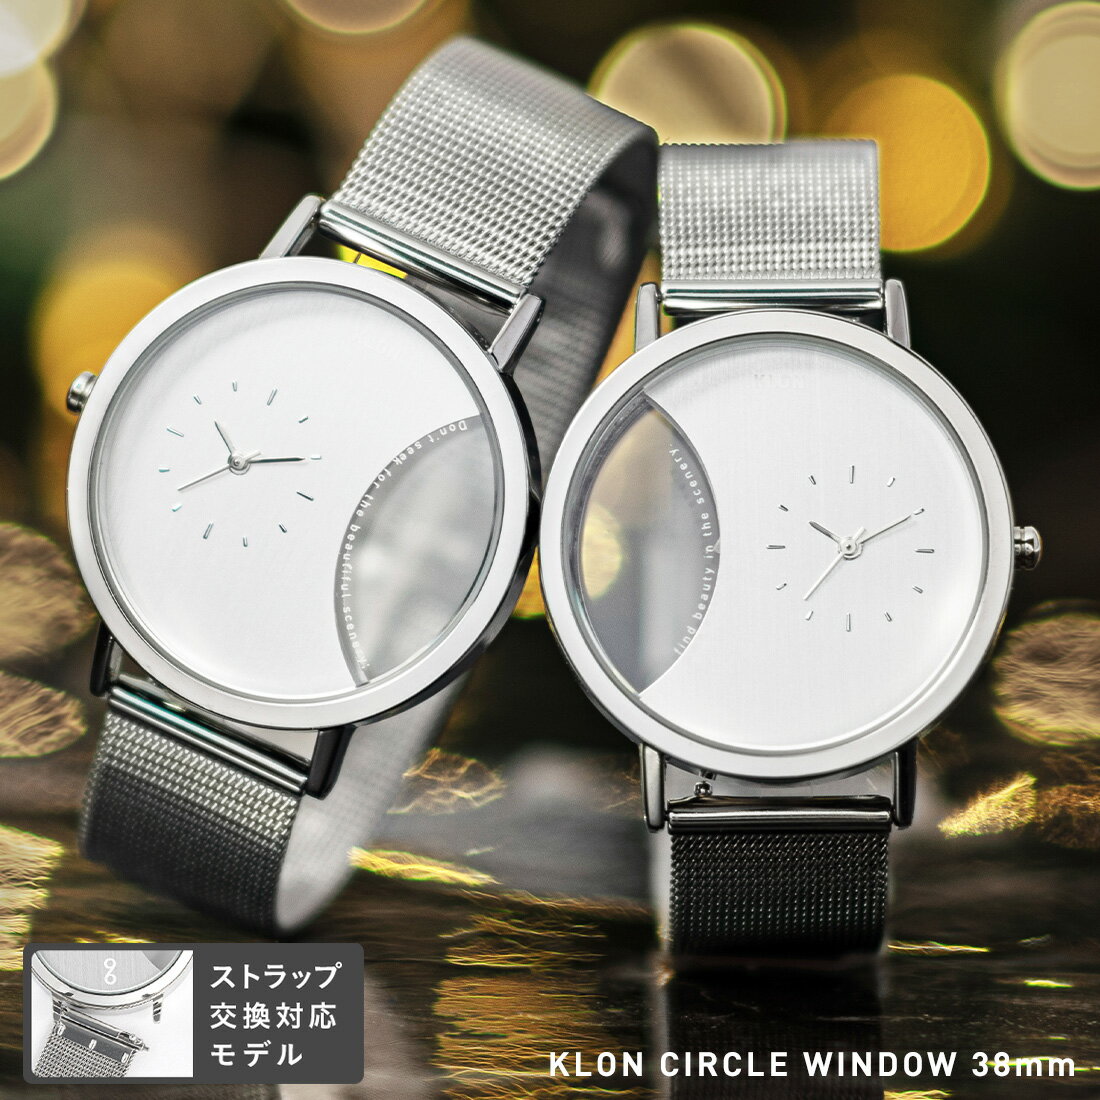 【SALE20%OFF】腕時計 モノトーン ビジネス ステンレス ベルト シンプル ペア腕時計 お揃い ペア カップル 記念日 プレゼント 大人 ギフトメンズ レディース オールジェンダー ブランド スケル…